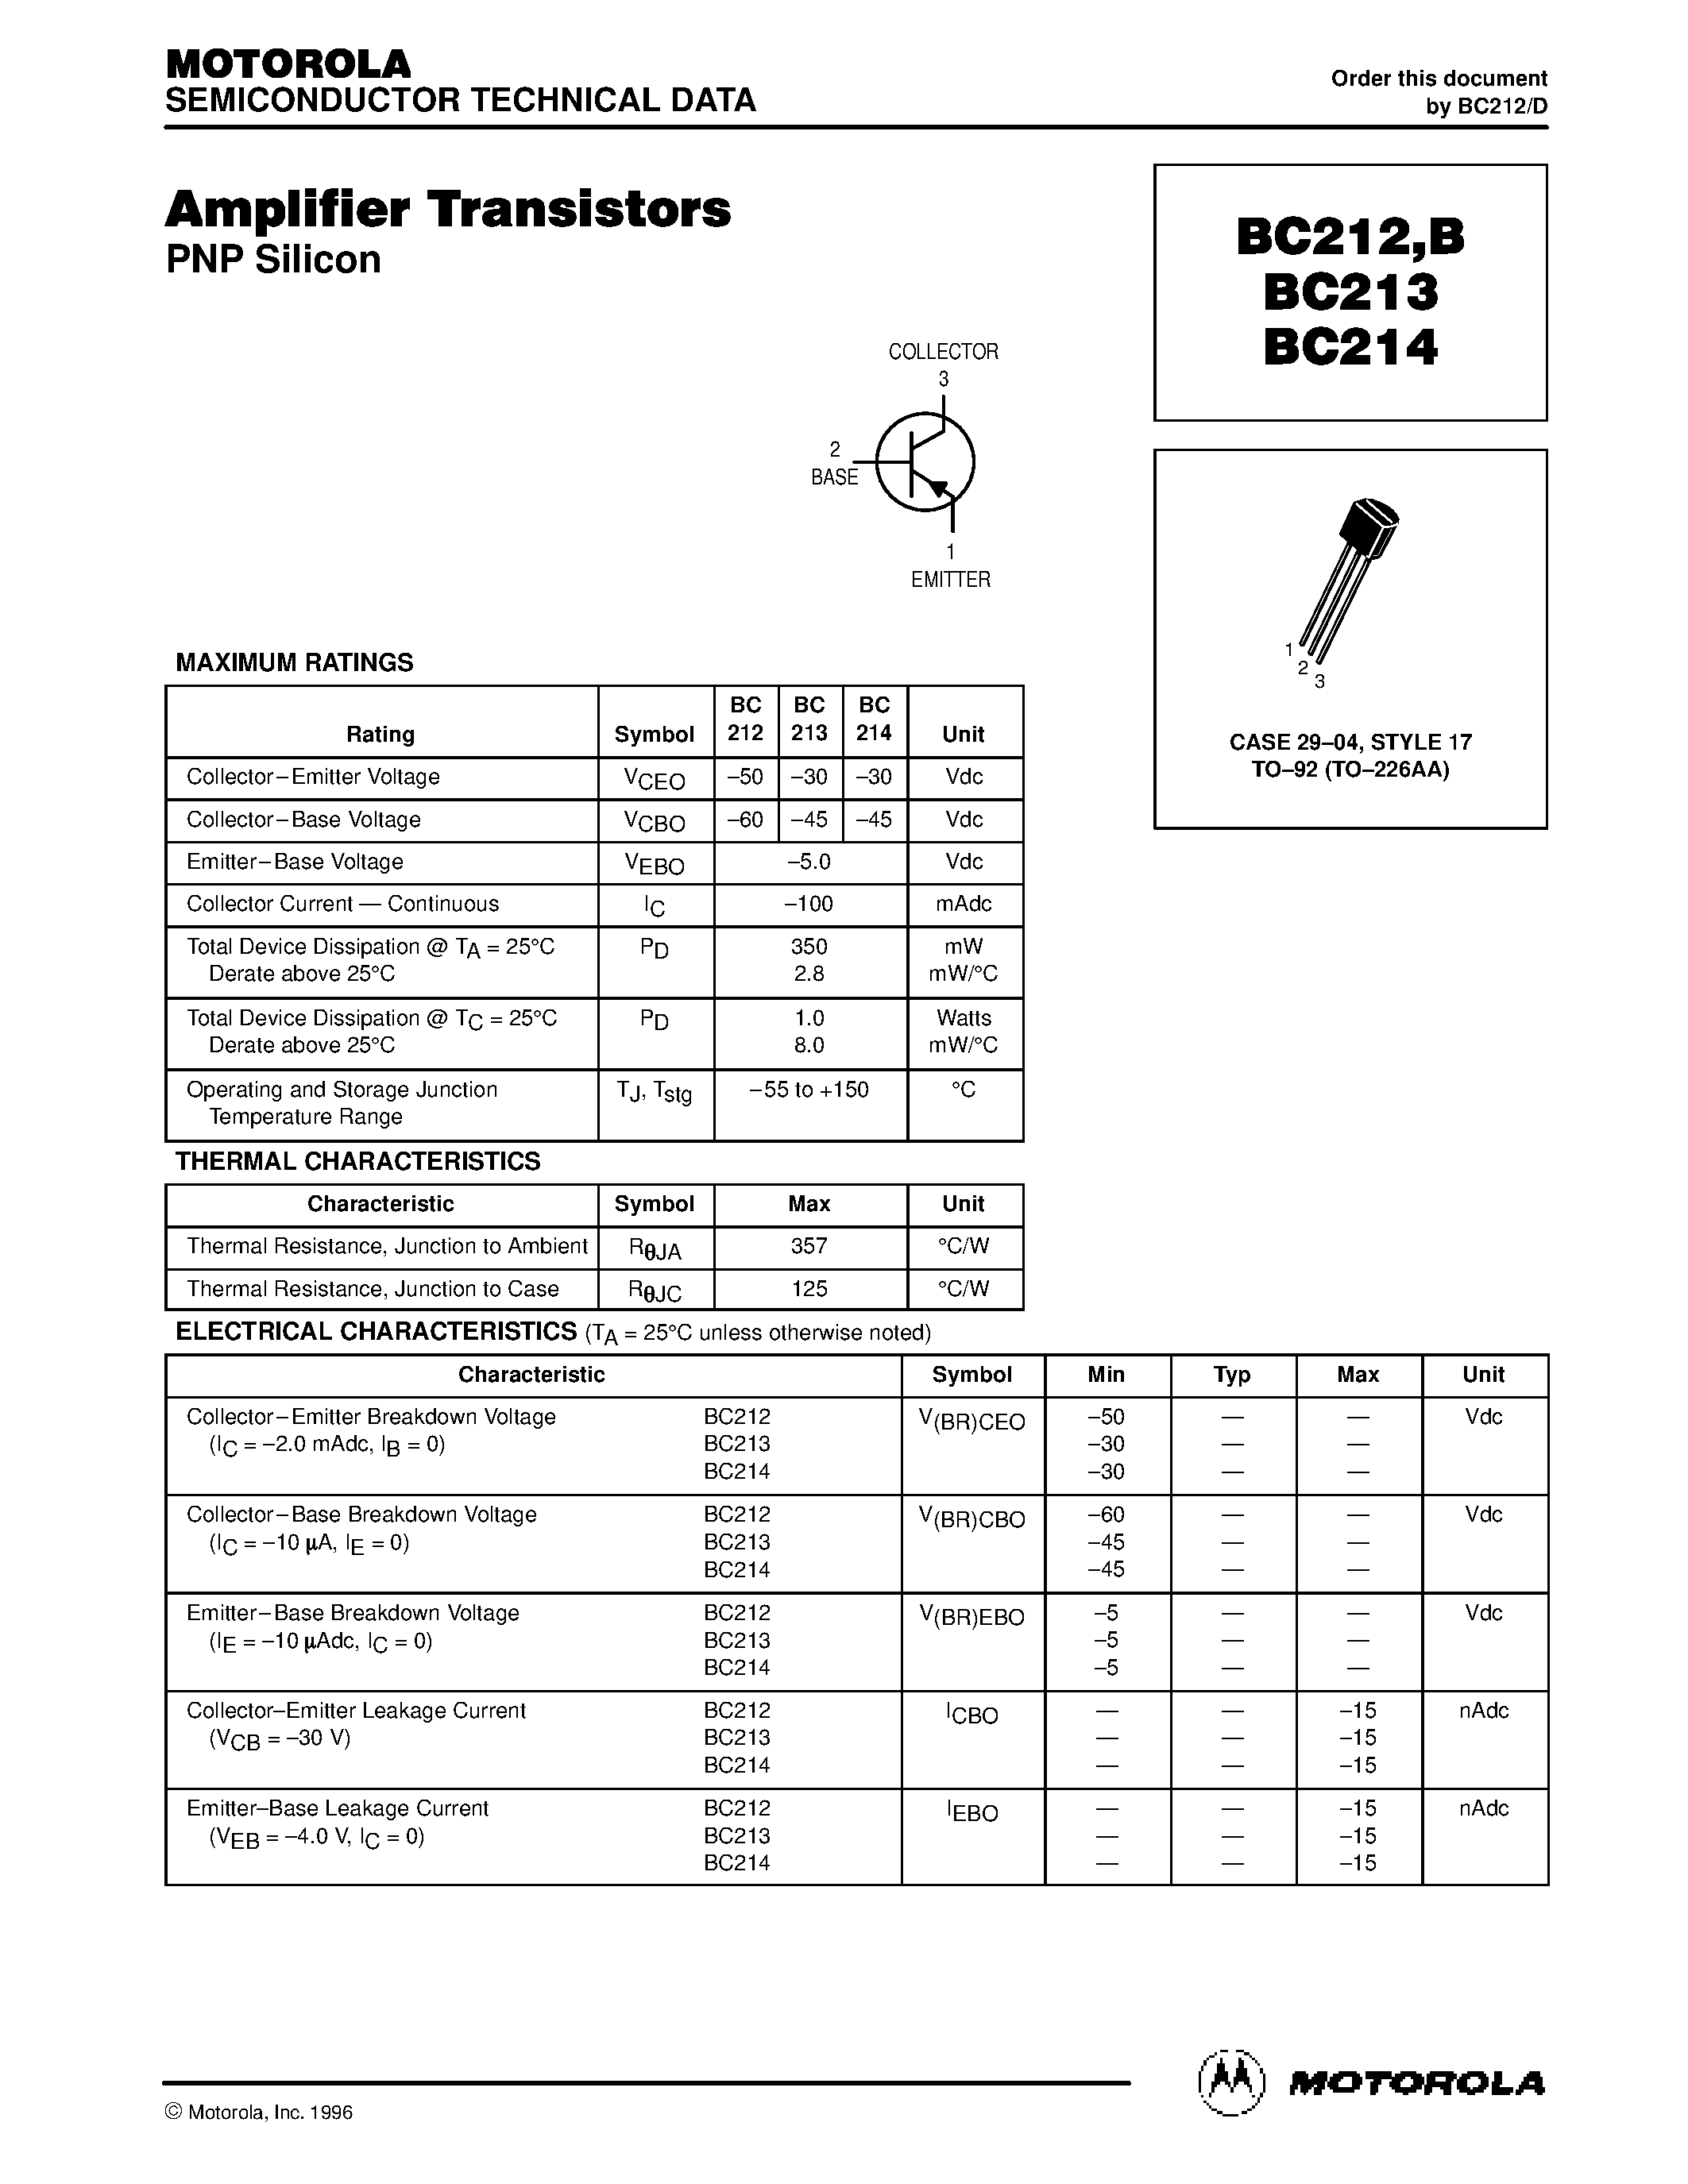 Datasheet BC213 - Amplifier Transistors(PNP Silicon) page 1